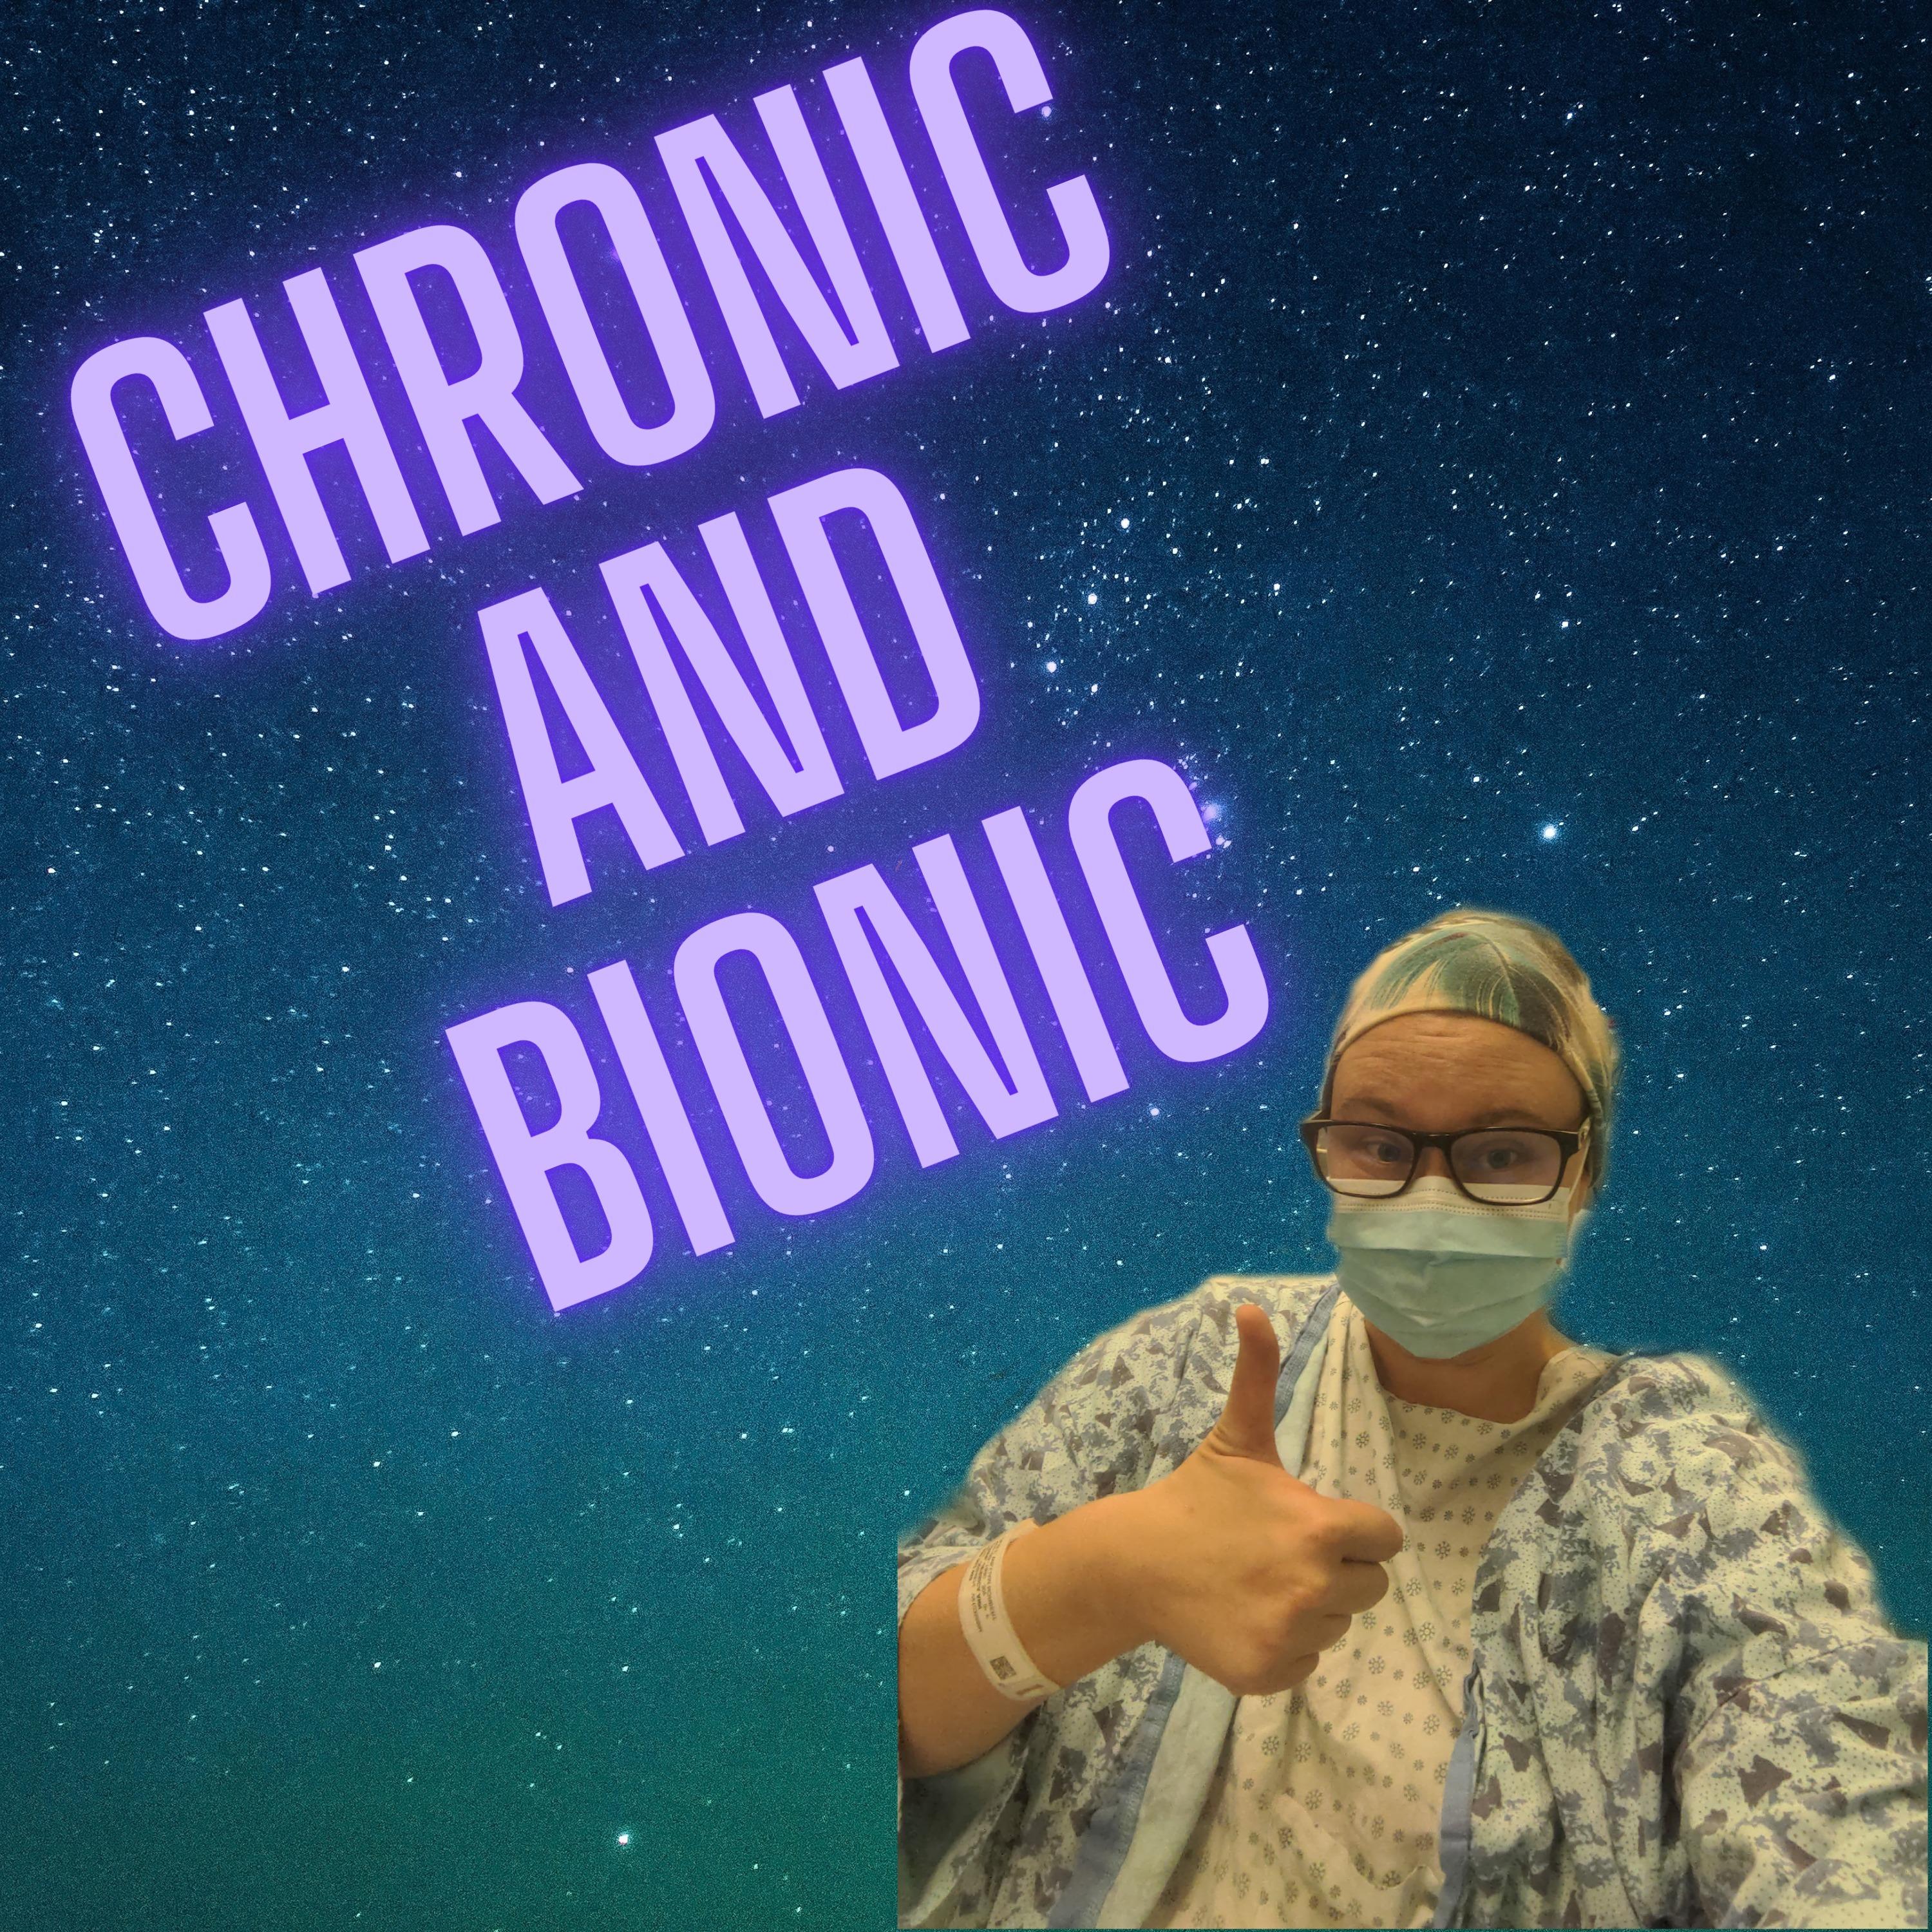 Chronic and Bionic